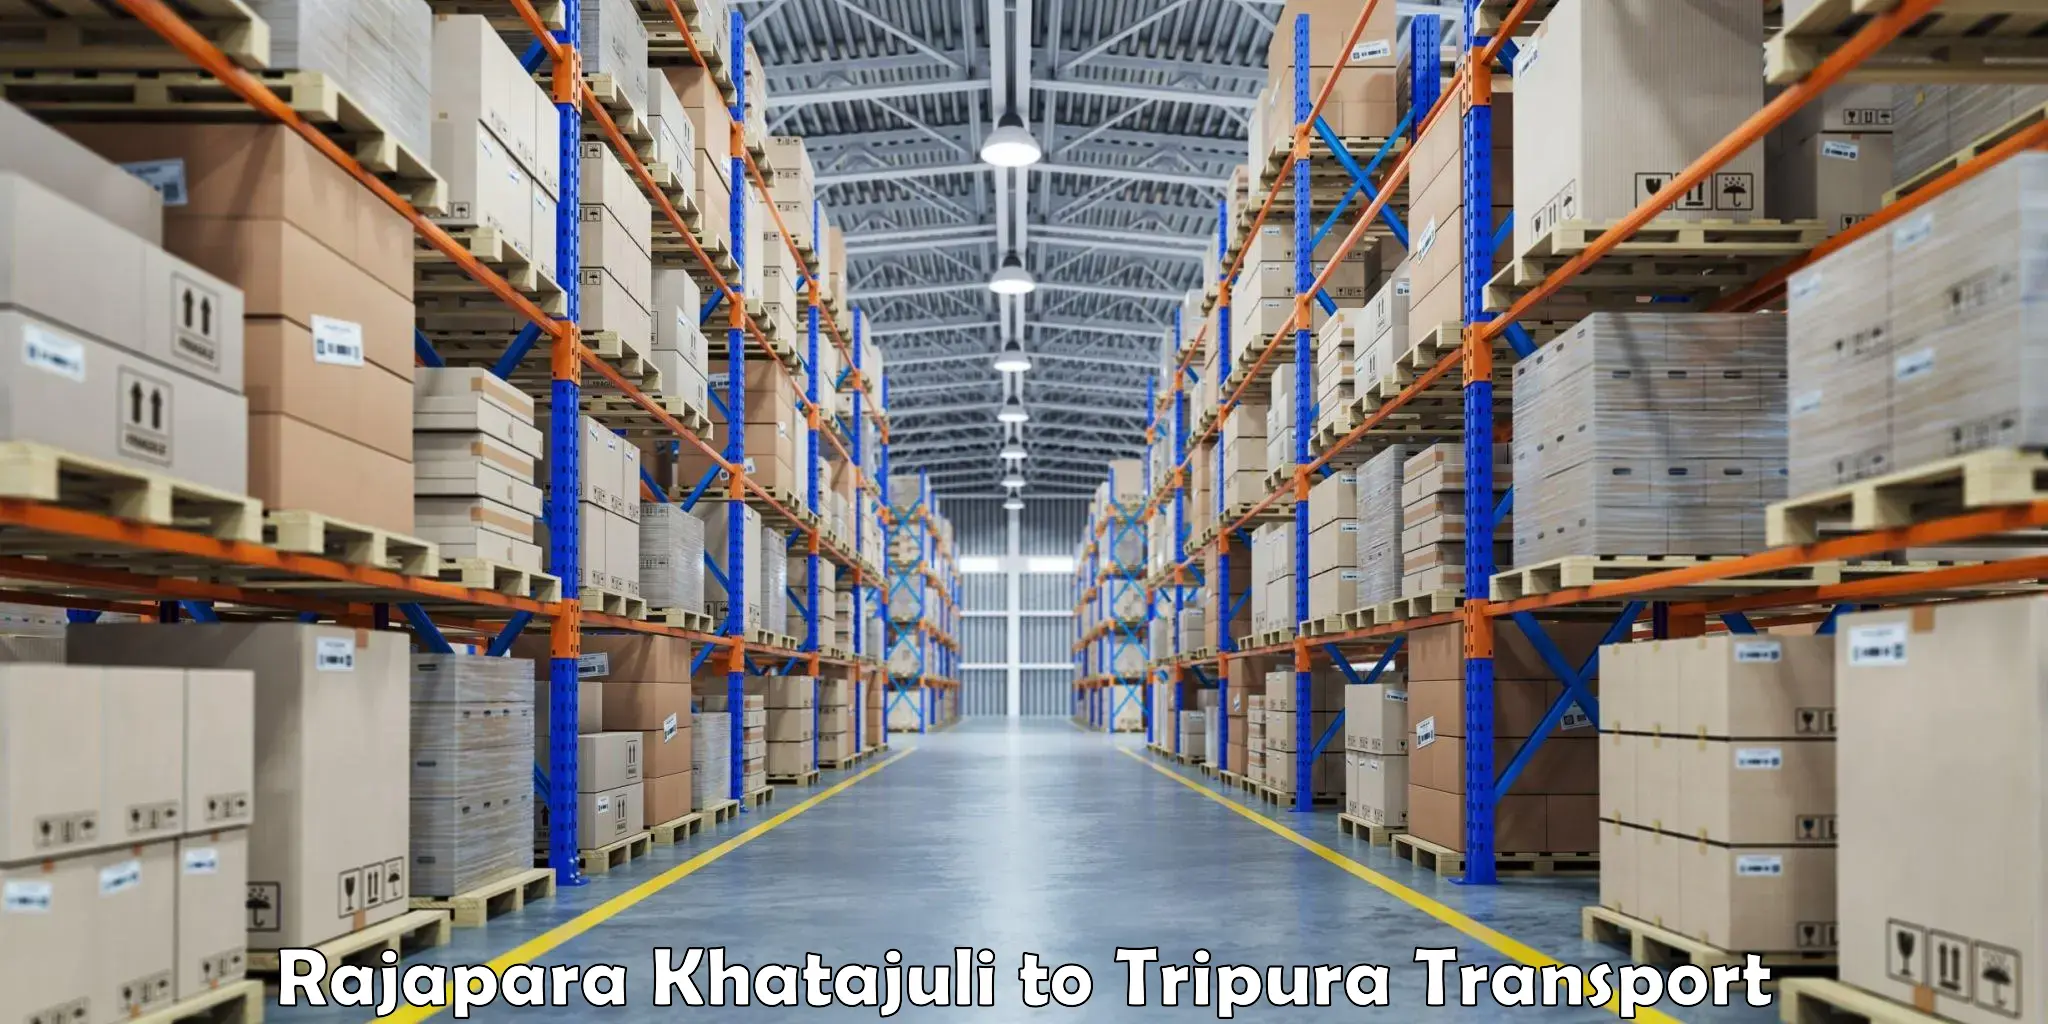 Truck transport companies in India Rajapara Khatajuli to Agartala